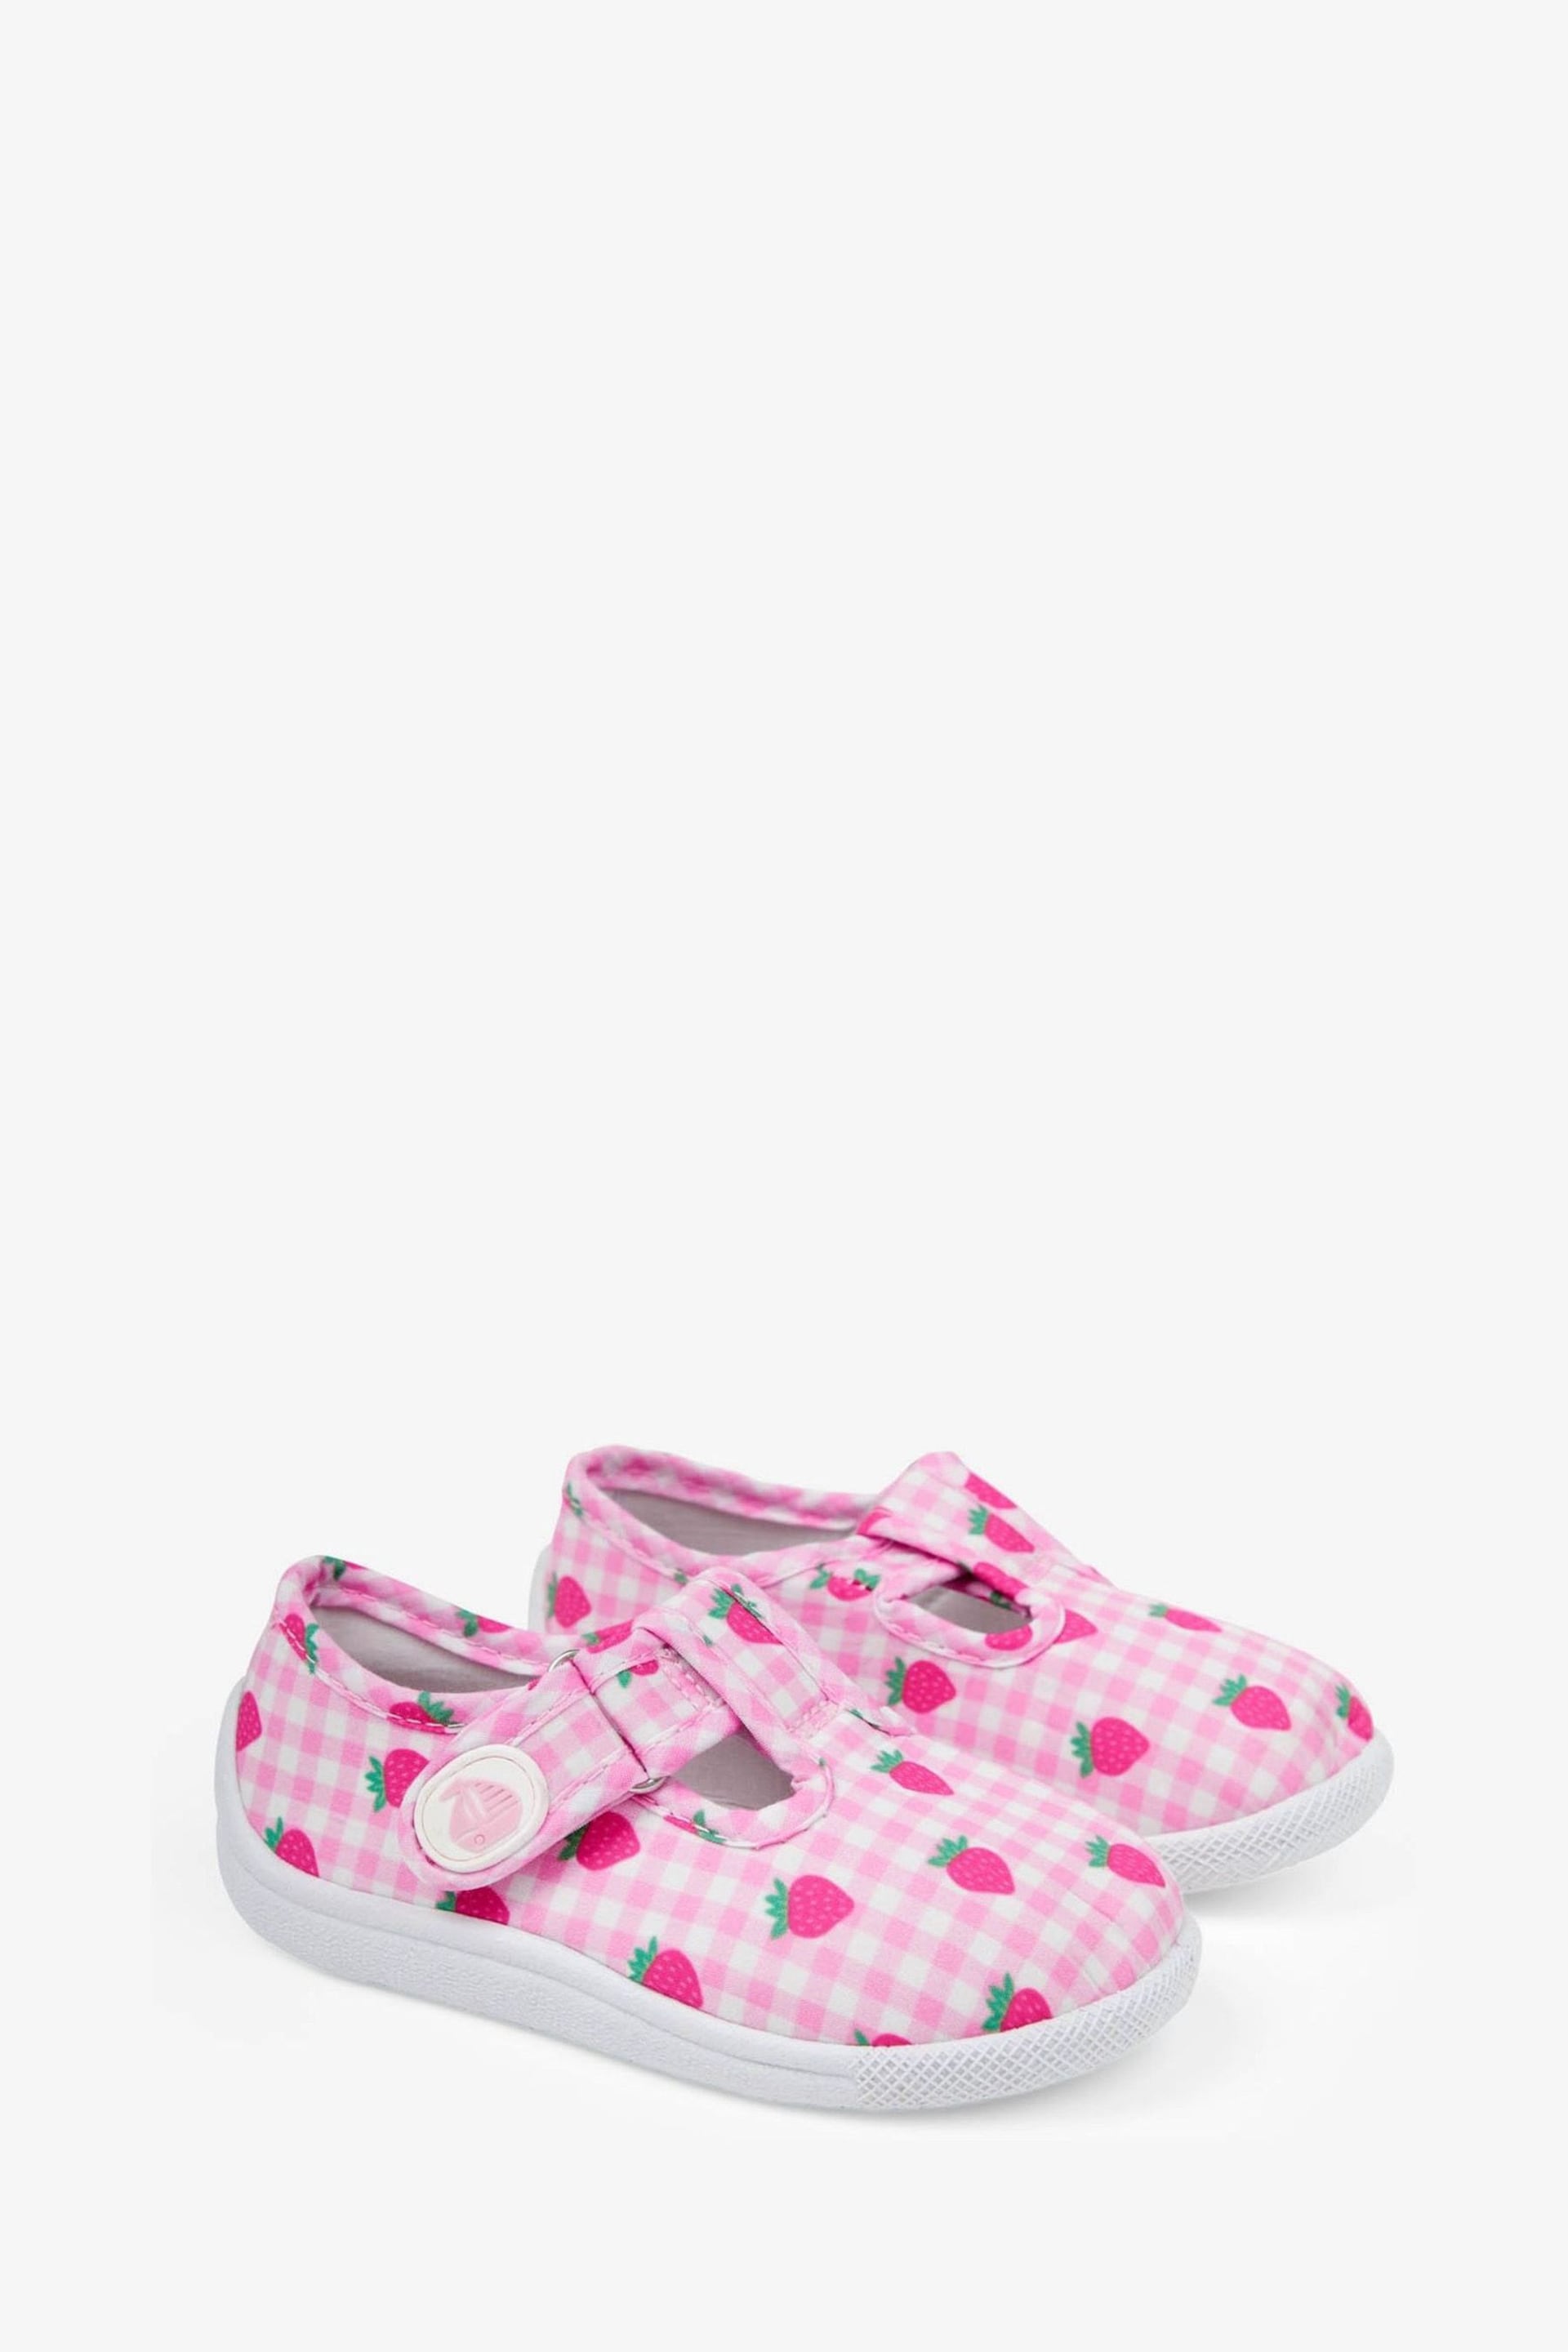 JoJo Maman Bébé Pink Girls' Strawberry Canvas Summer Shoes - Image 1 of 3